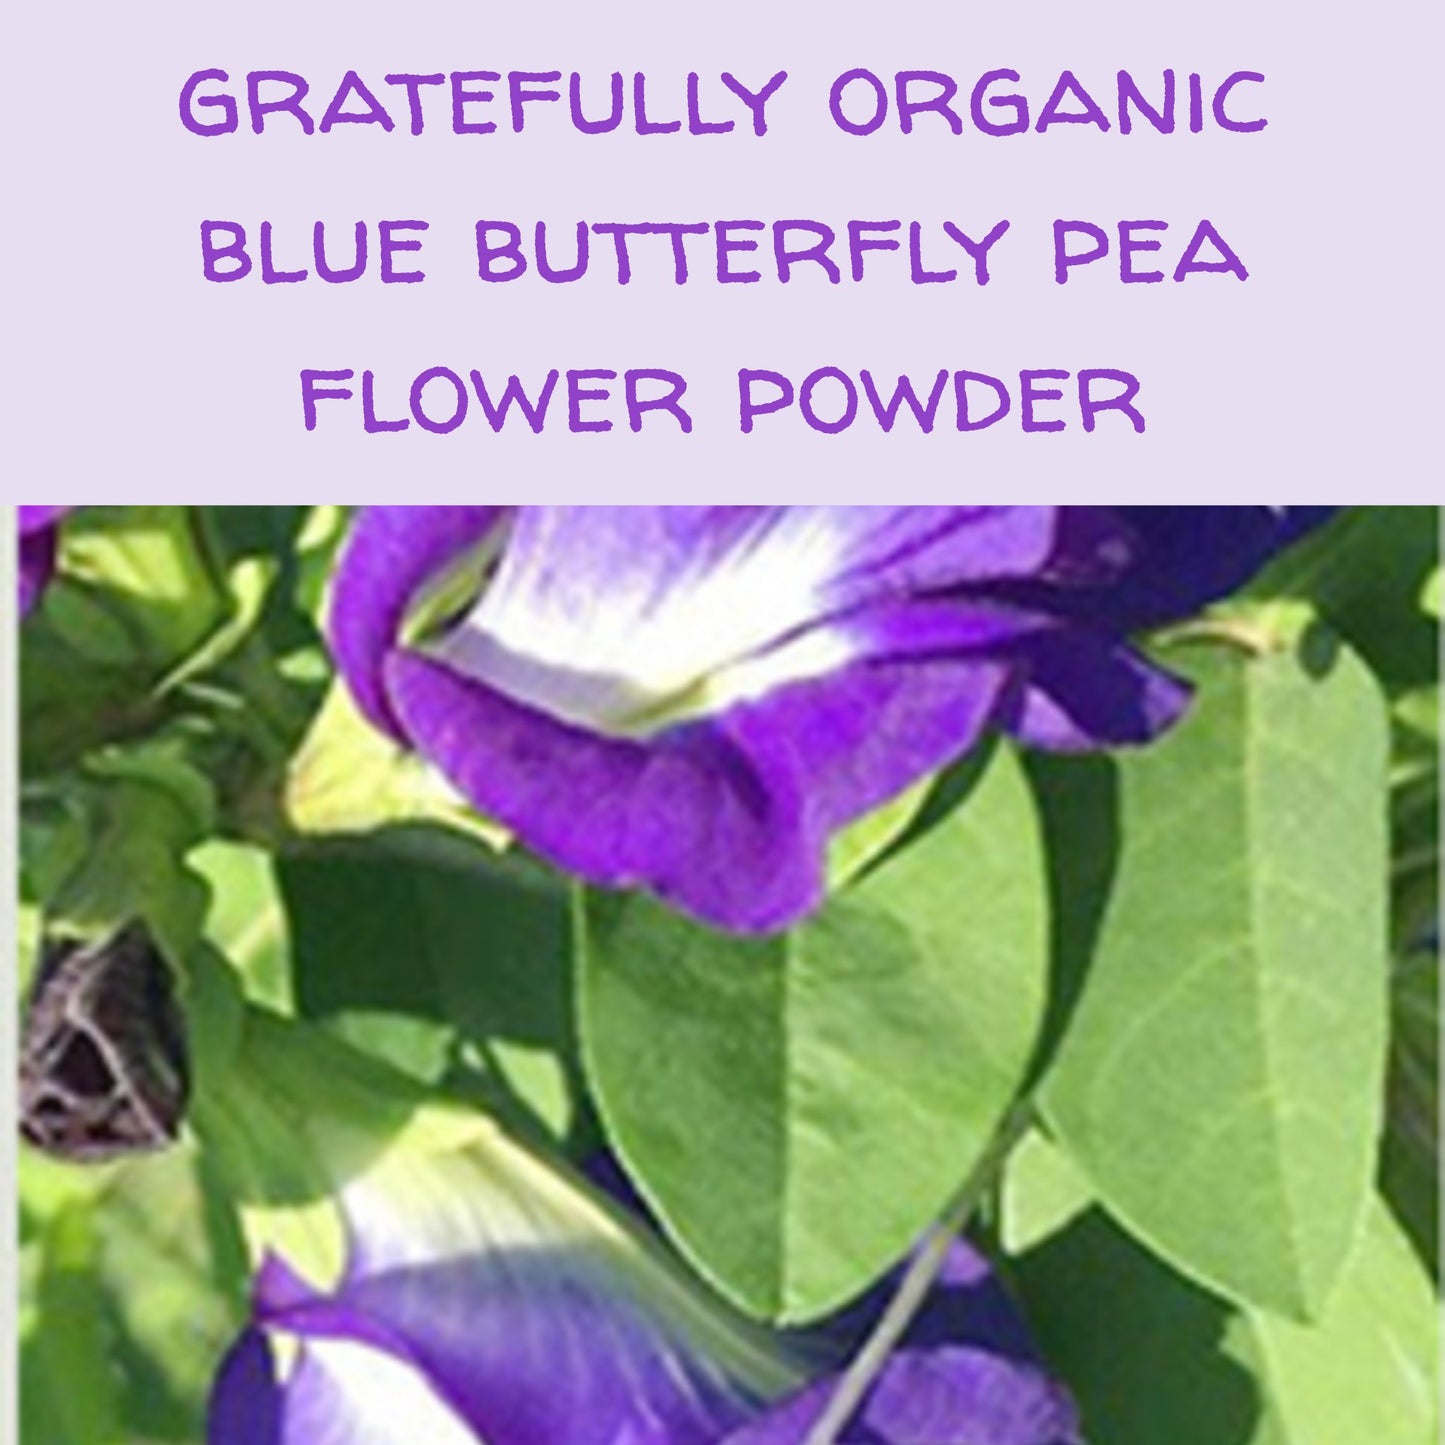 Gratefully Organic Blue Butterfly Pea Flower Powder matcha The Grateful Tea Co. 